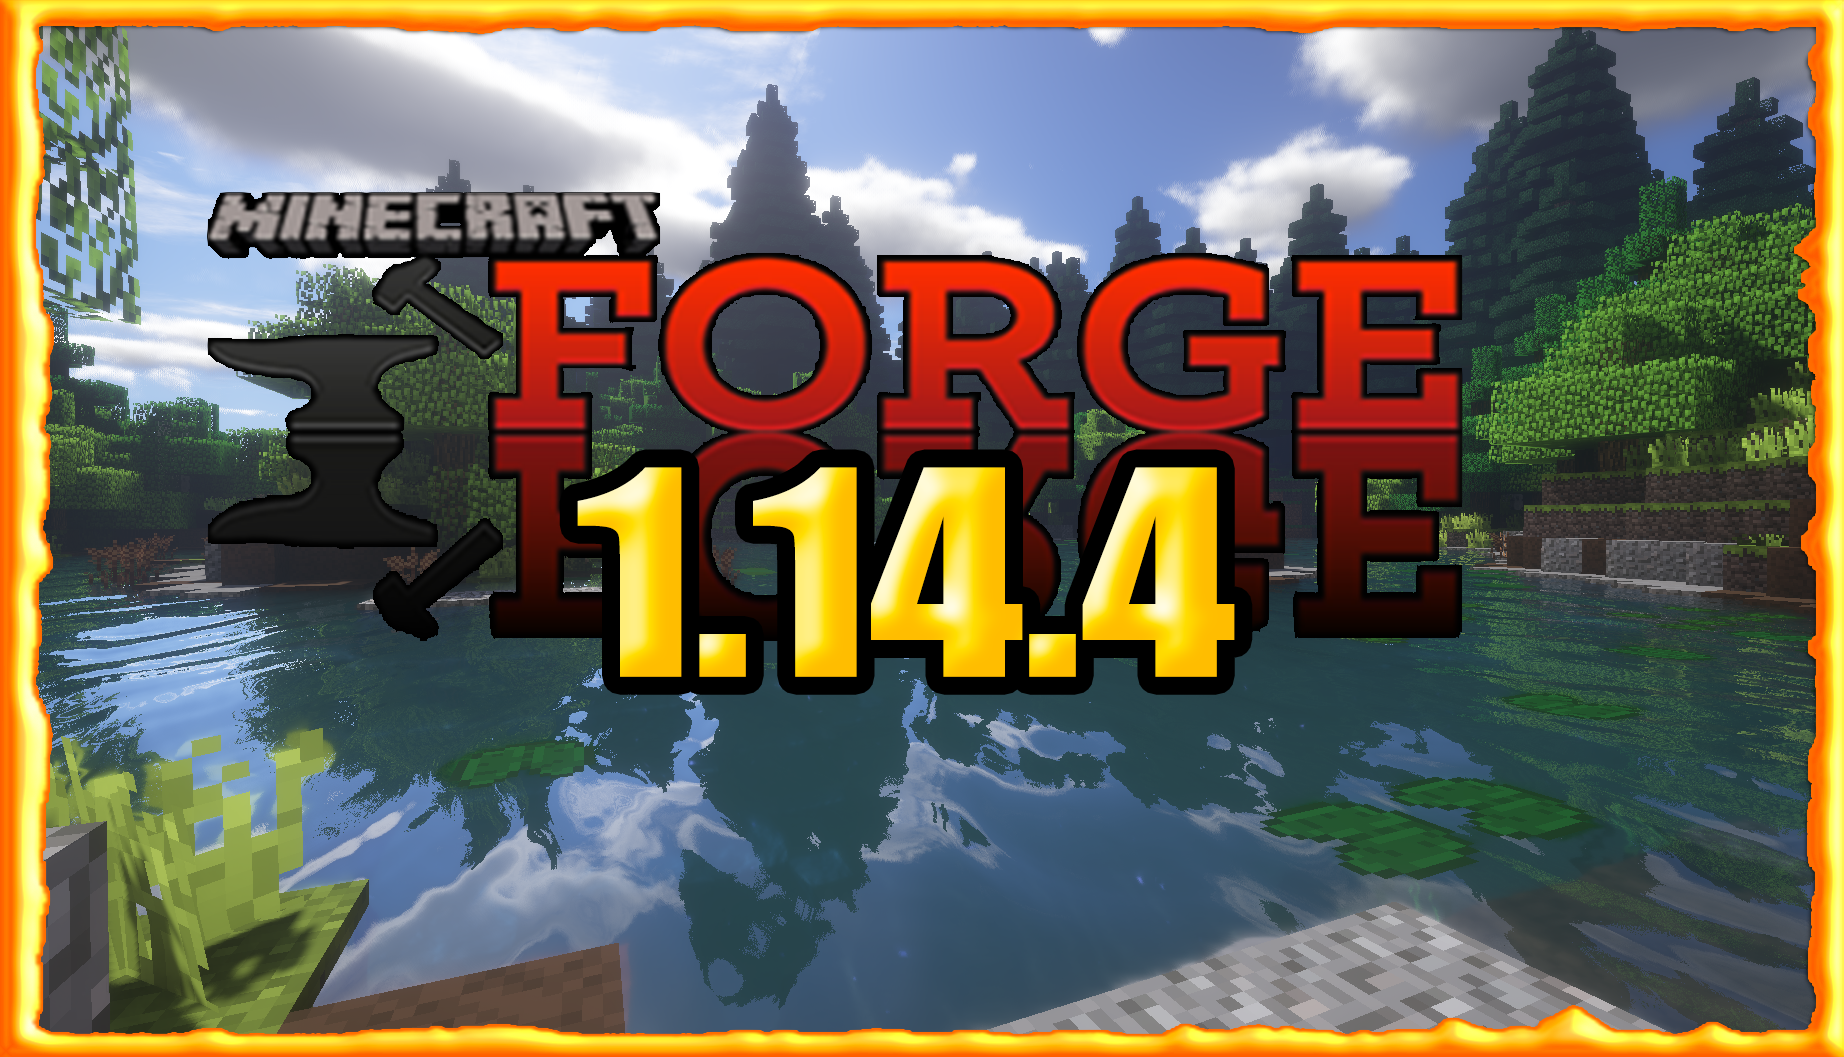 Cursed forge майнкрафт. Фордж 1.14.4. Новая версия Forge. Обложка Curse Forge. Сайт Forge майнкрафт взломали.